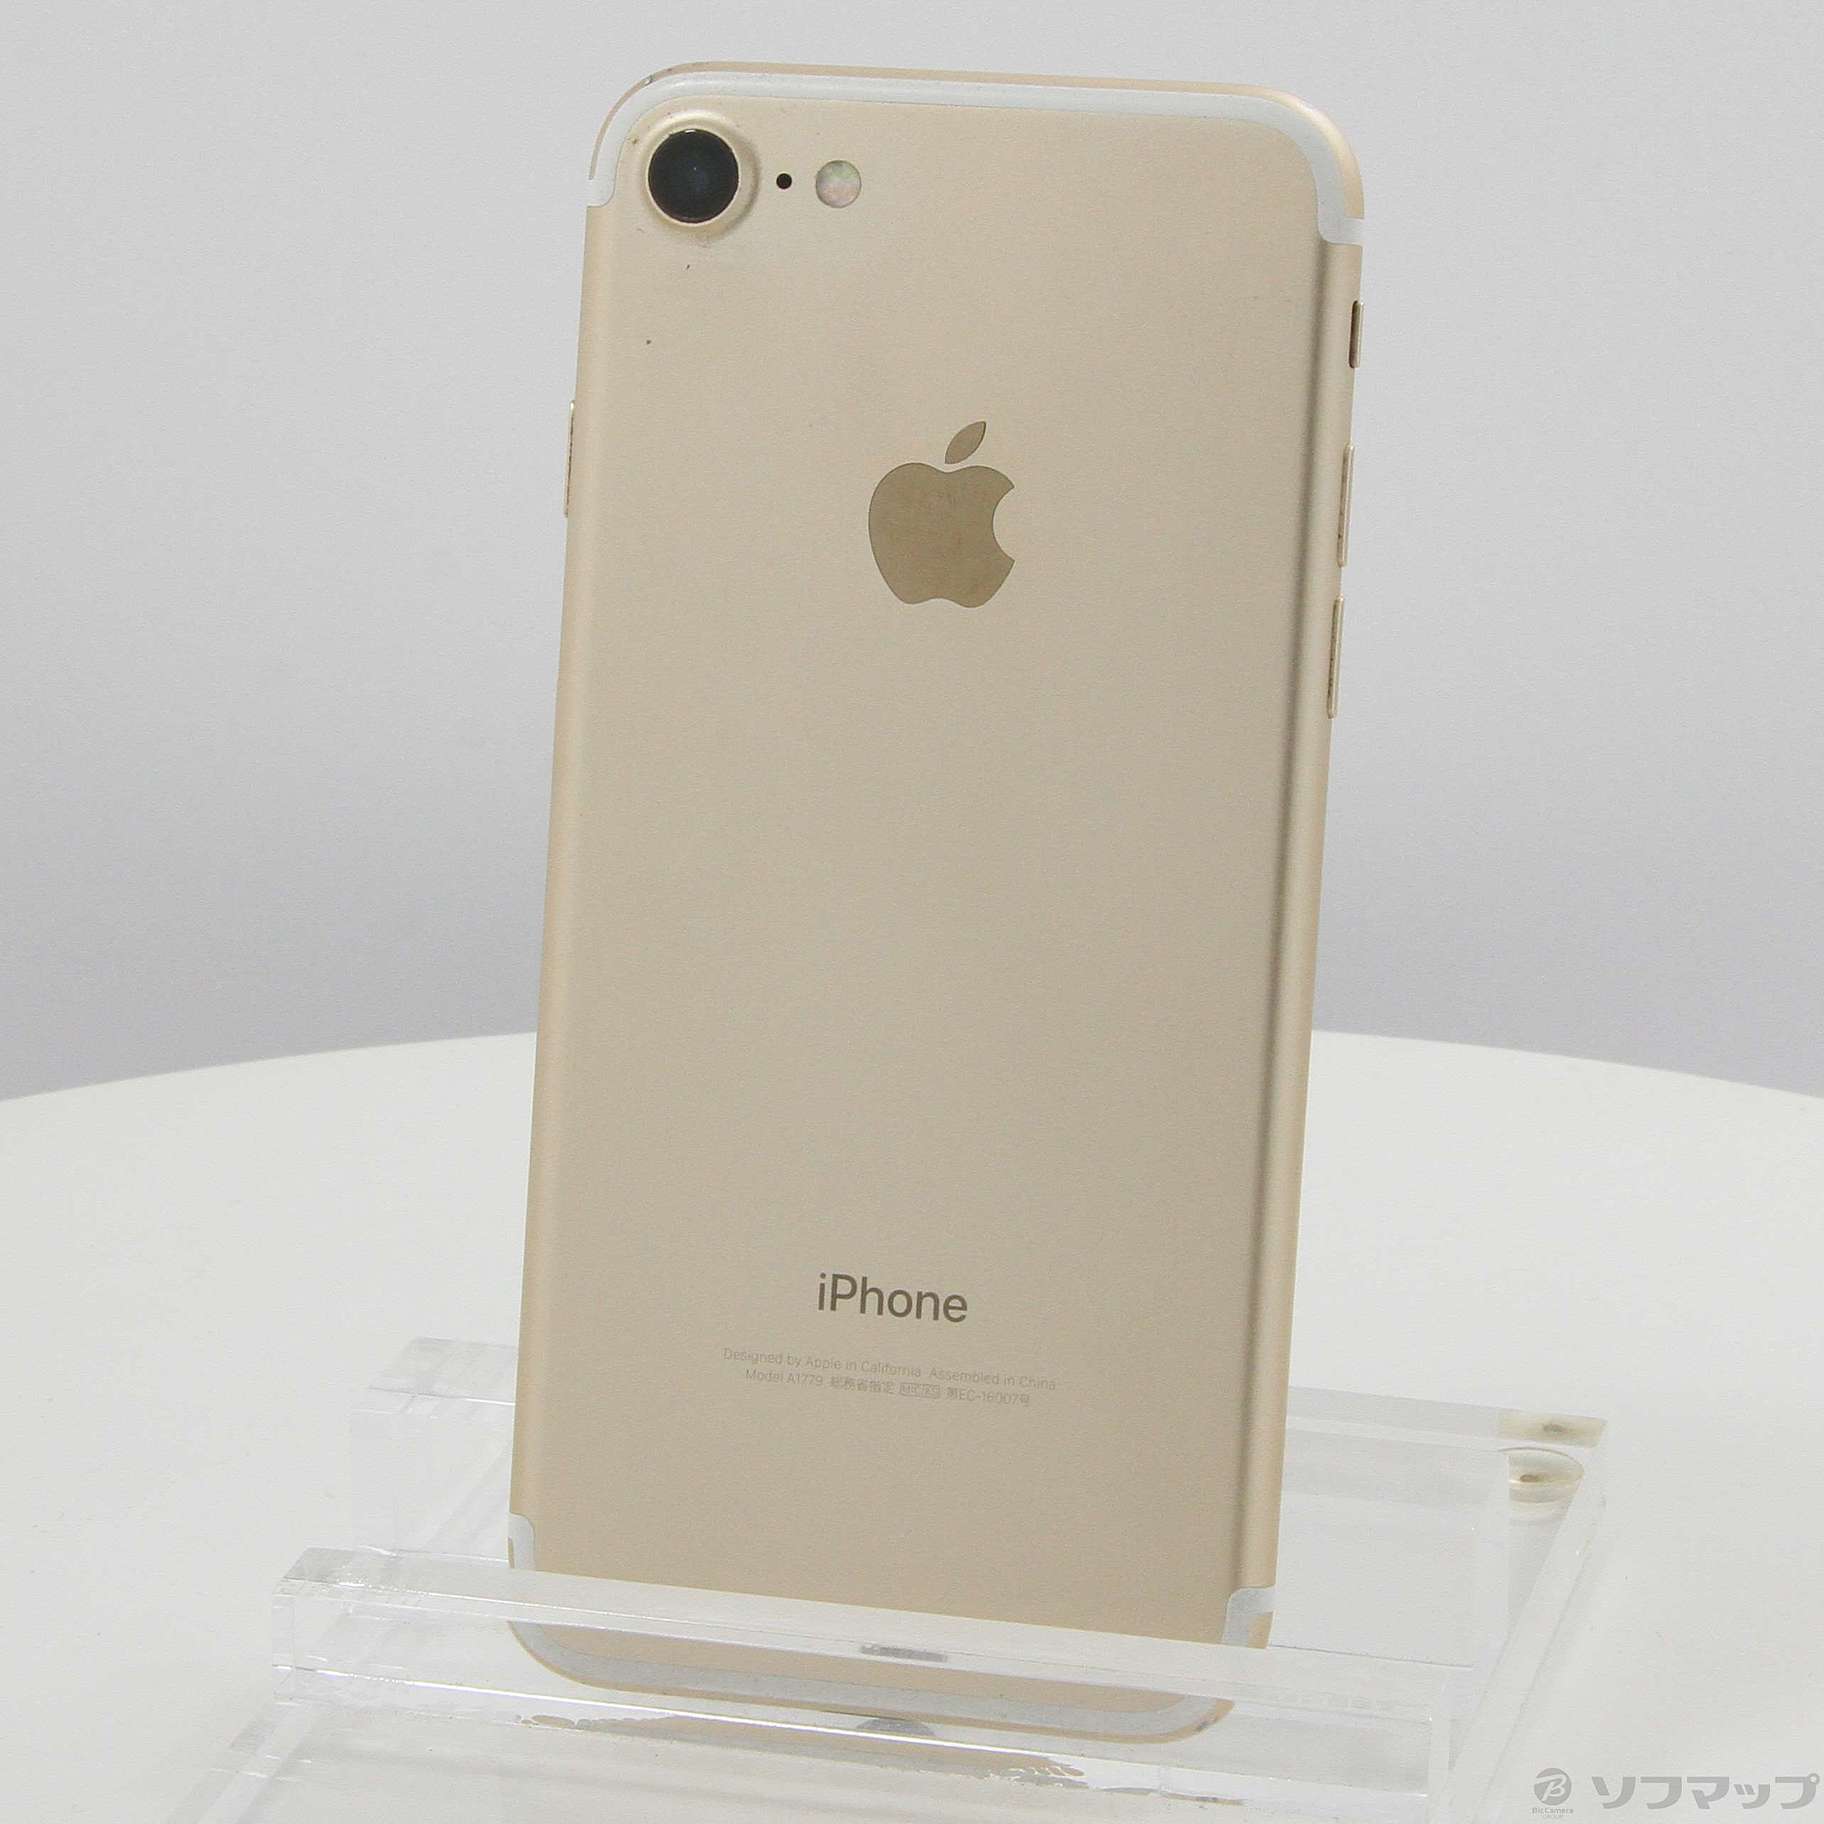 iPhone7 Gold 128GB